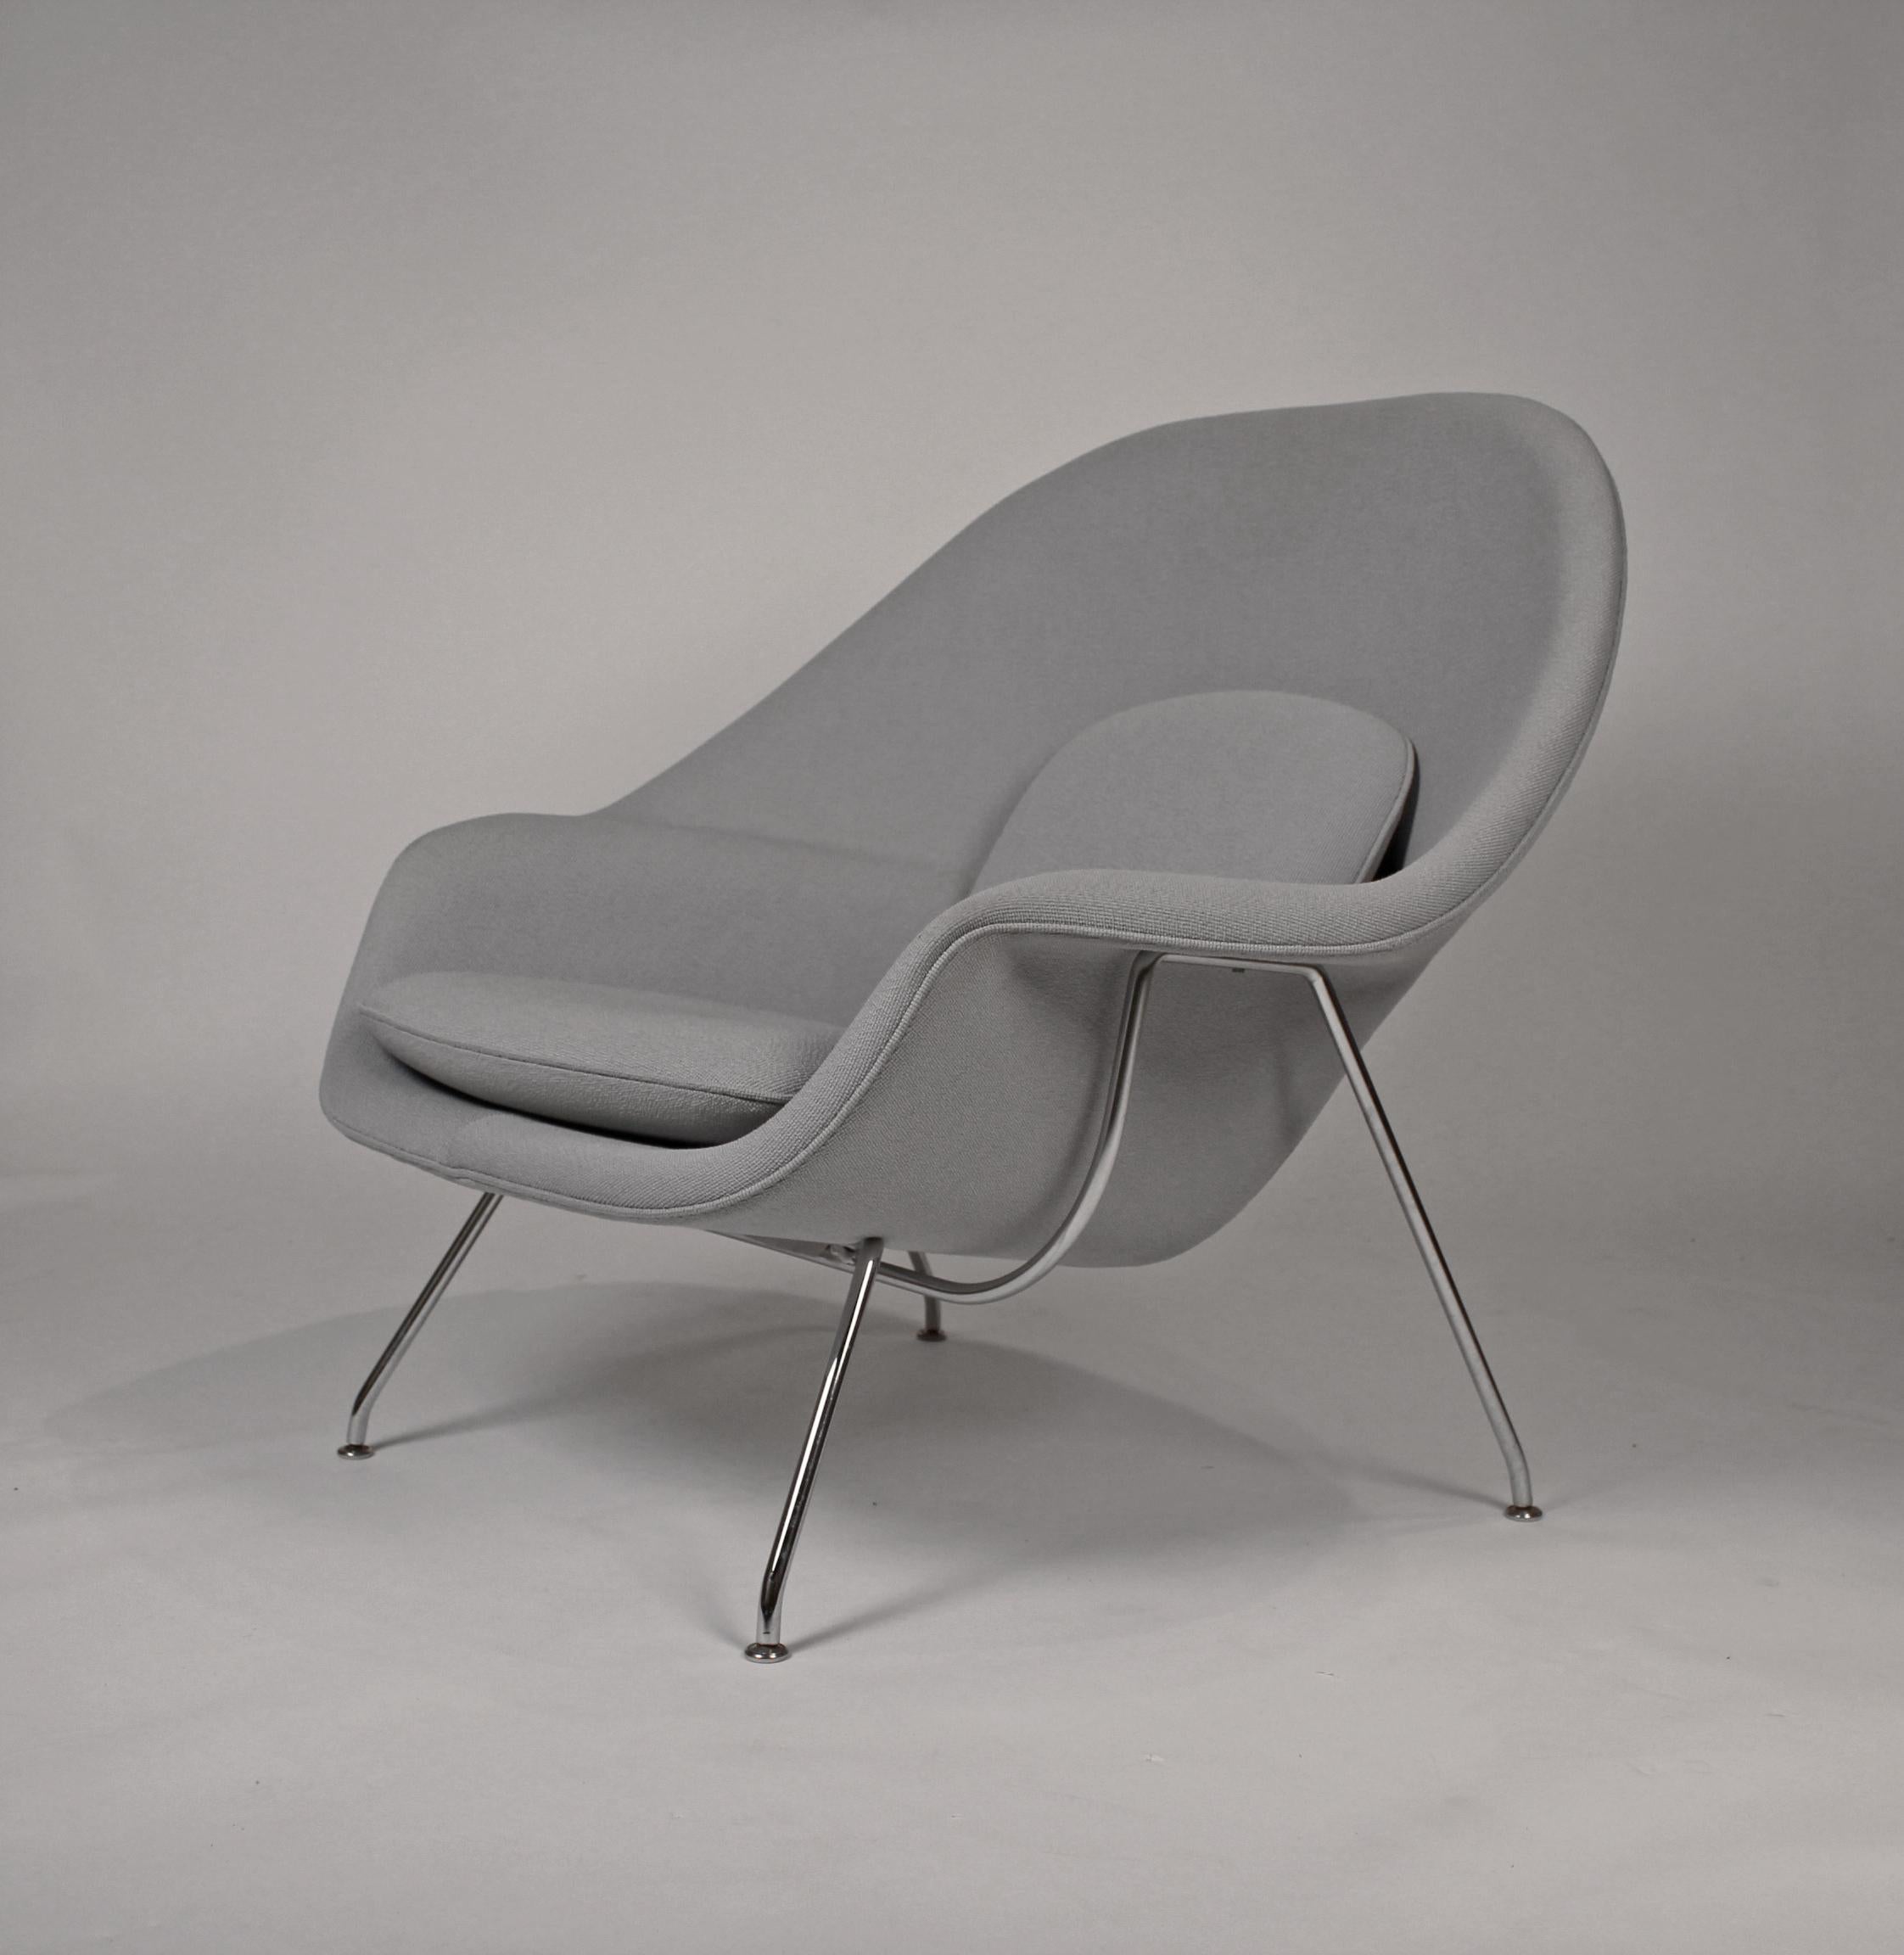 Mid-Century Modern Pair of Knoll Womb Chairs designed by Eero Saarinen